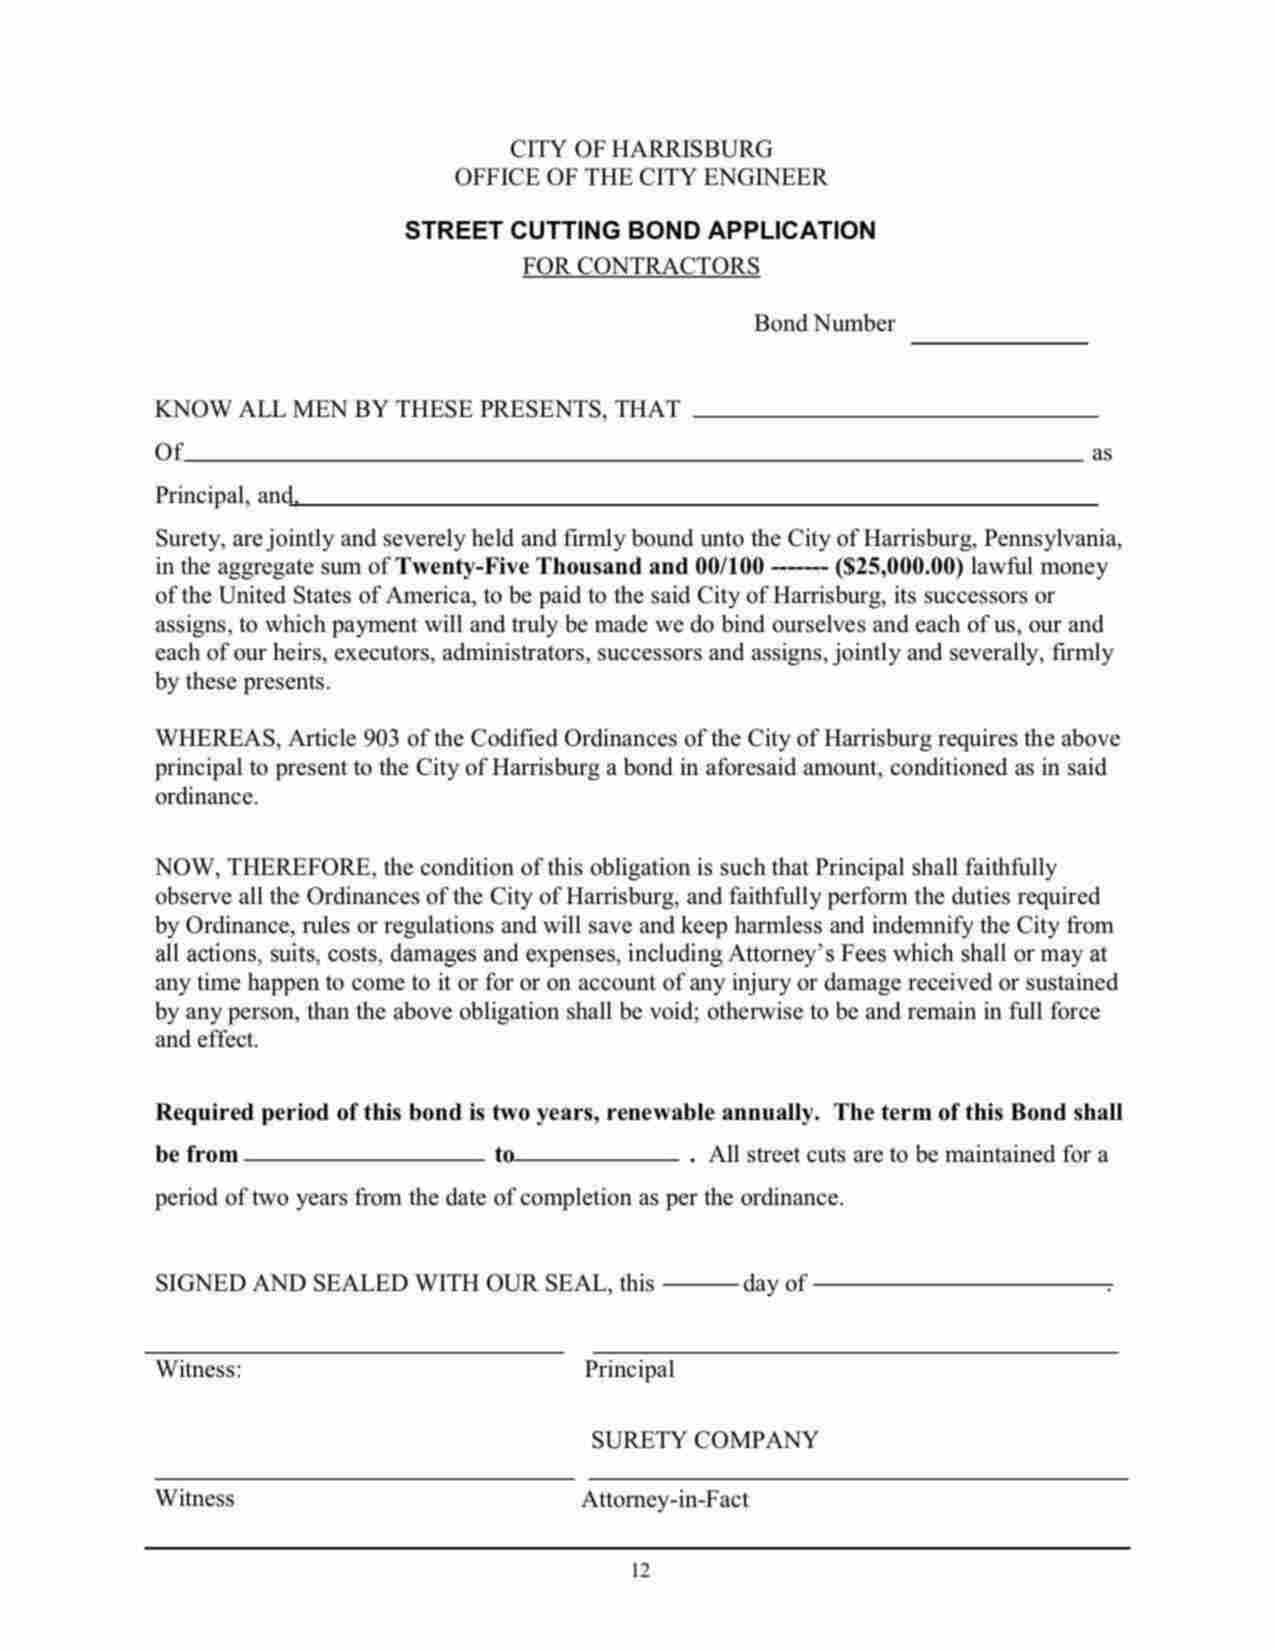 Pennsylvania Street Cutting for Contractors Bond Form